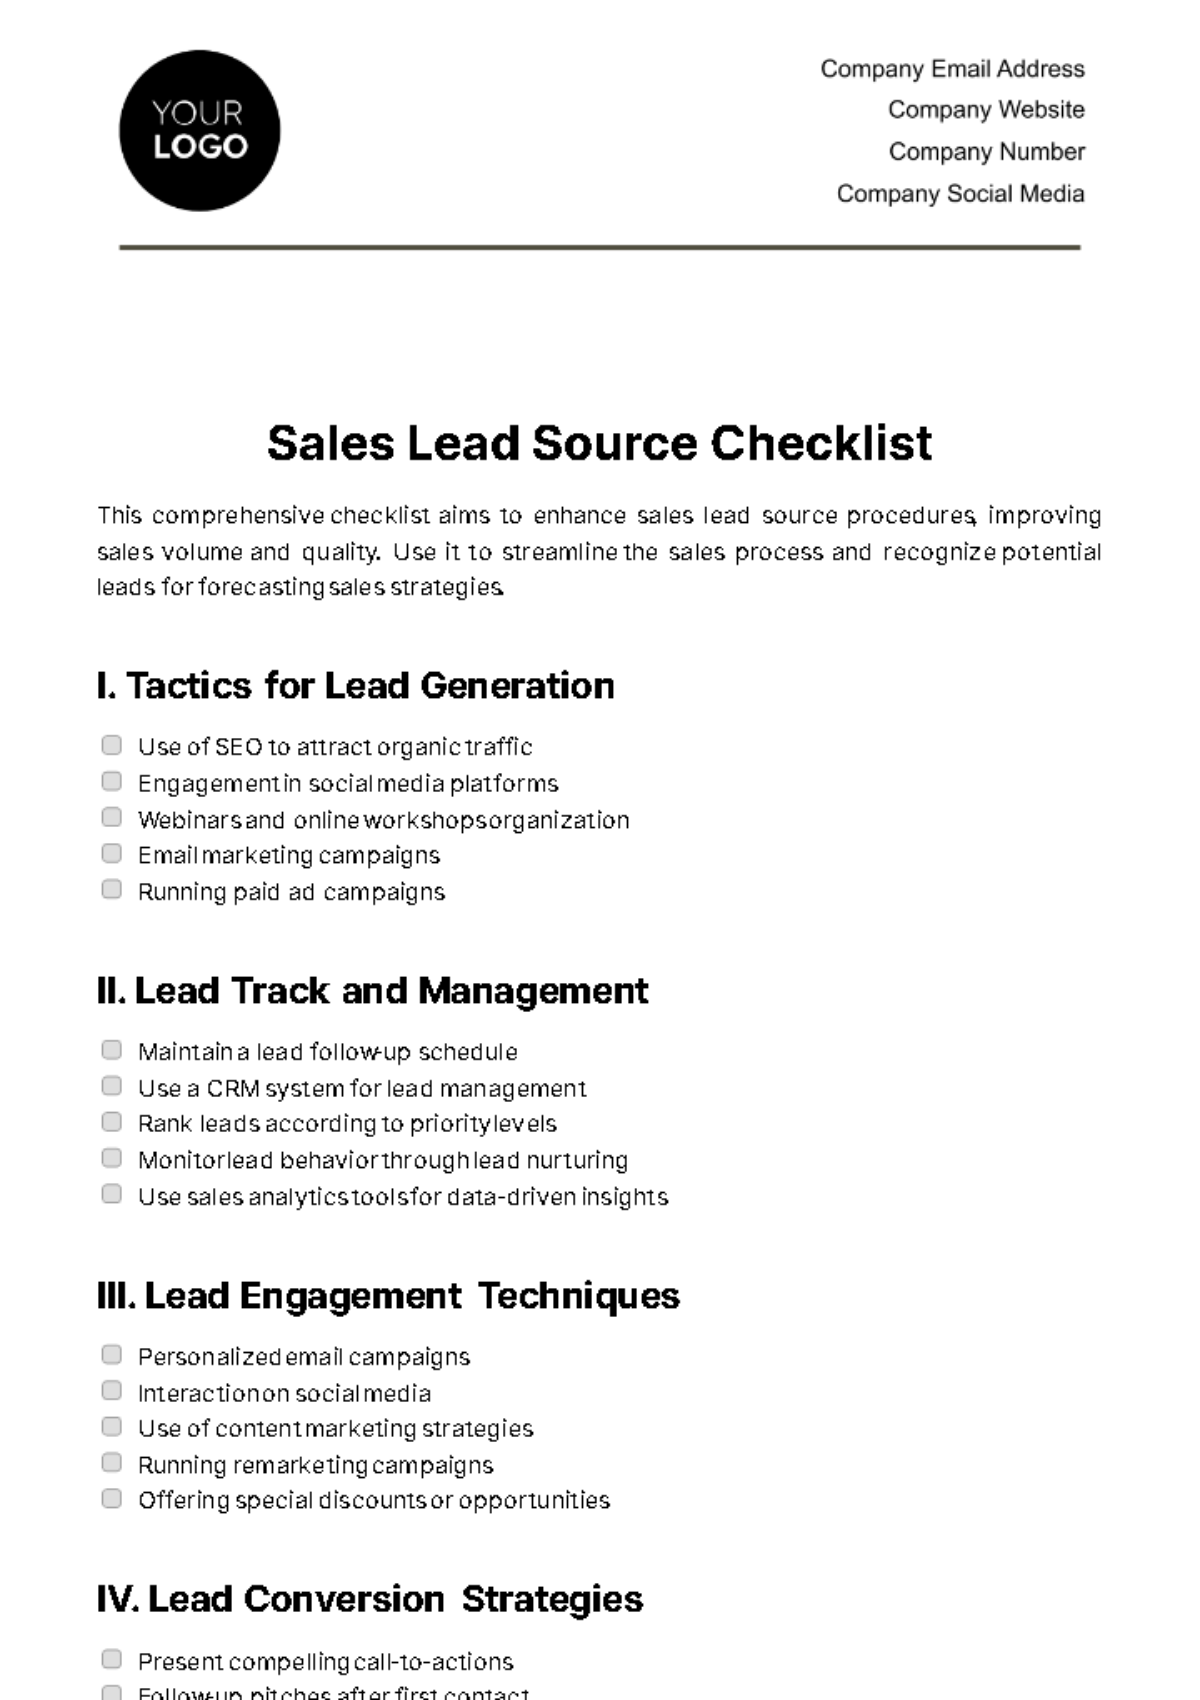 Sales Lead Source Checklist Template